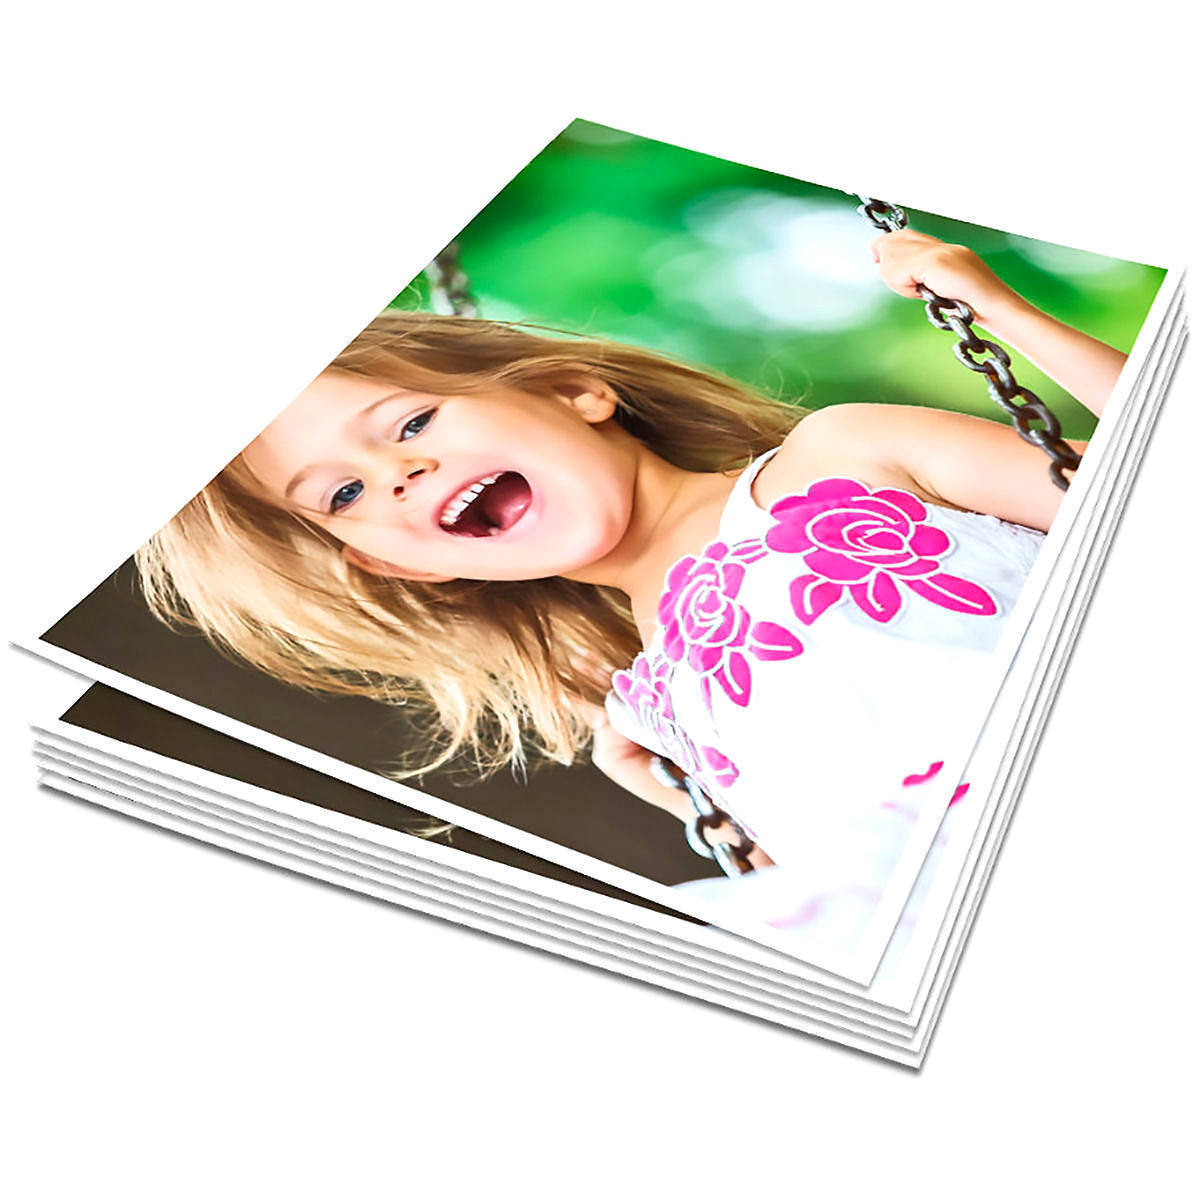 Papel Fotográfico Glossy 230g A4 Branco Brilhante Masterprint com 50 Folhas